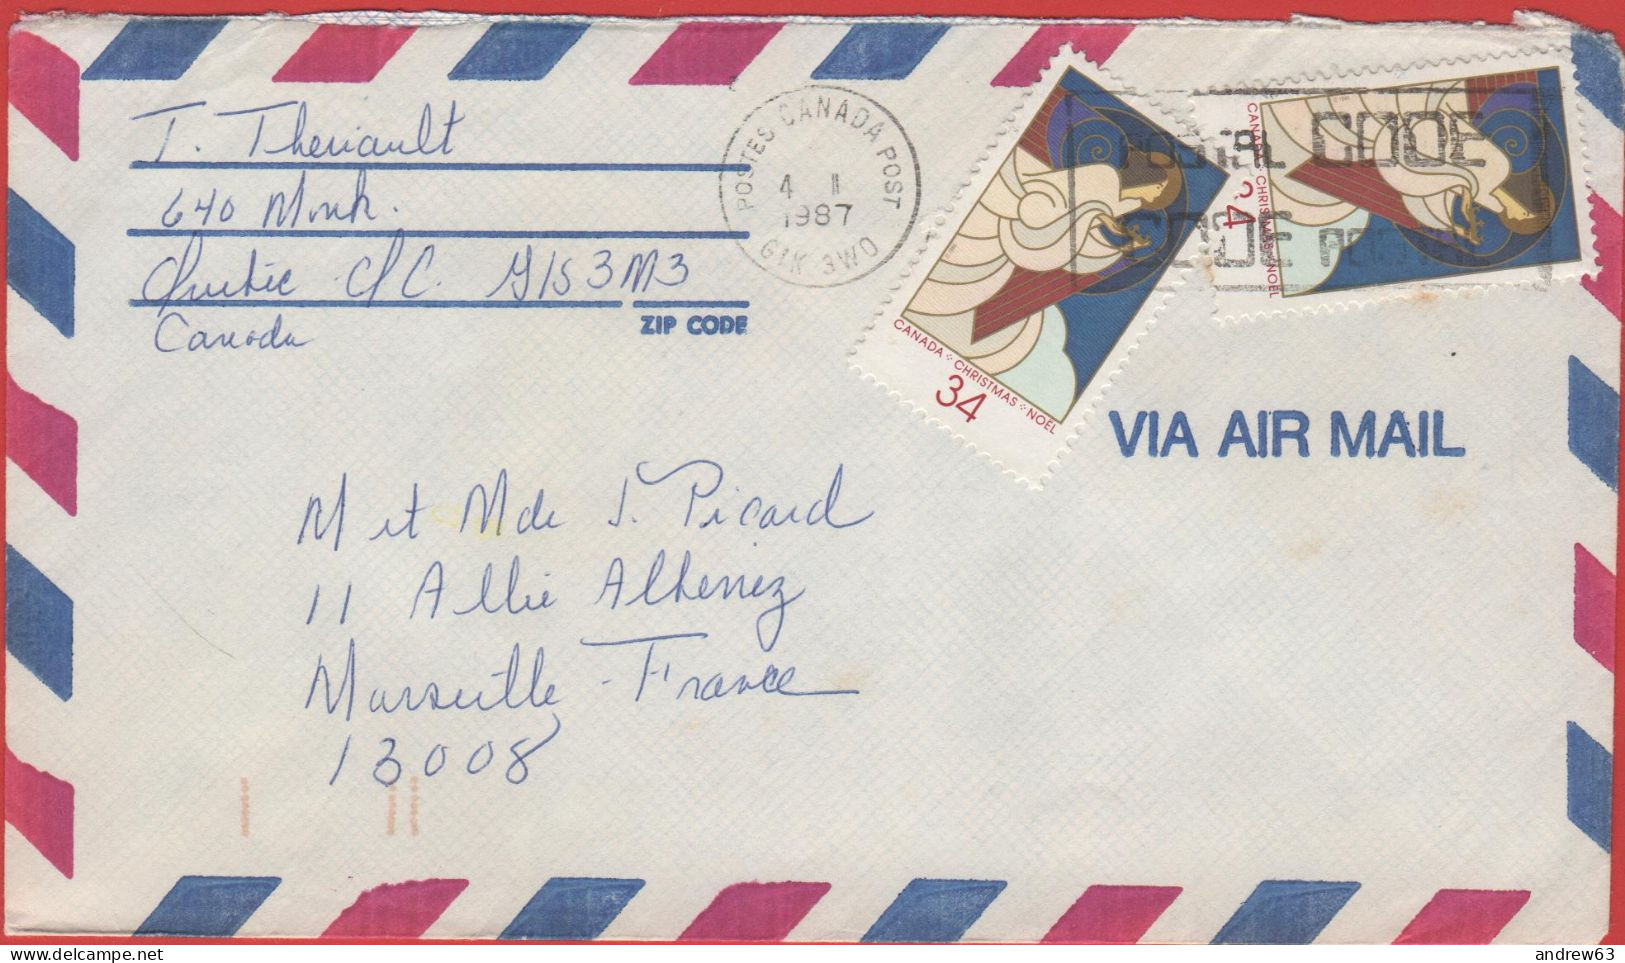 CANADA - 1987 - 2x 34c Christmas - Air Mail - Viaggiata Da GIK 3WO Per Marseille, France - Covers & Documents